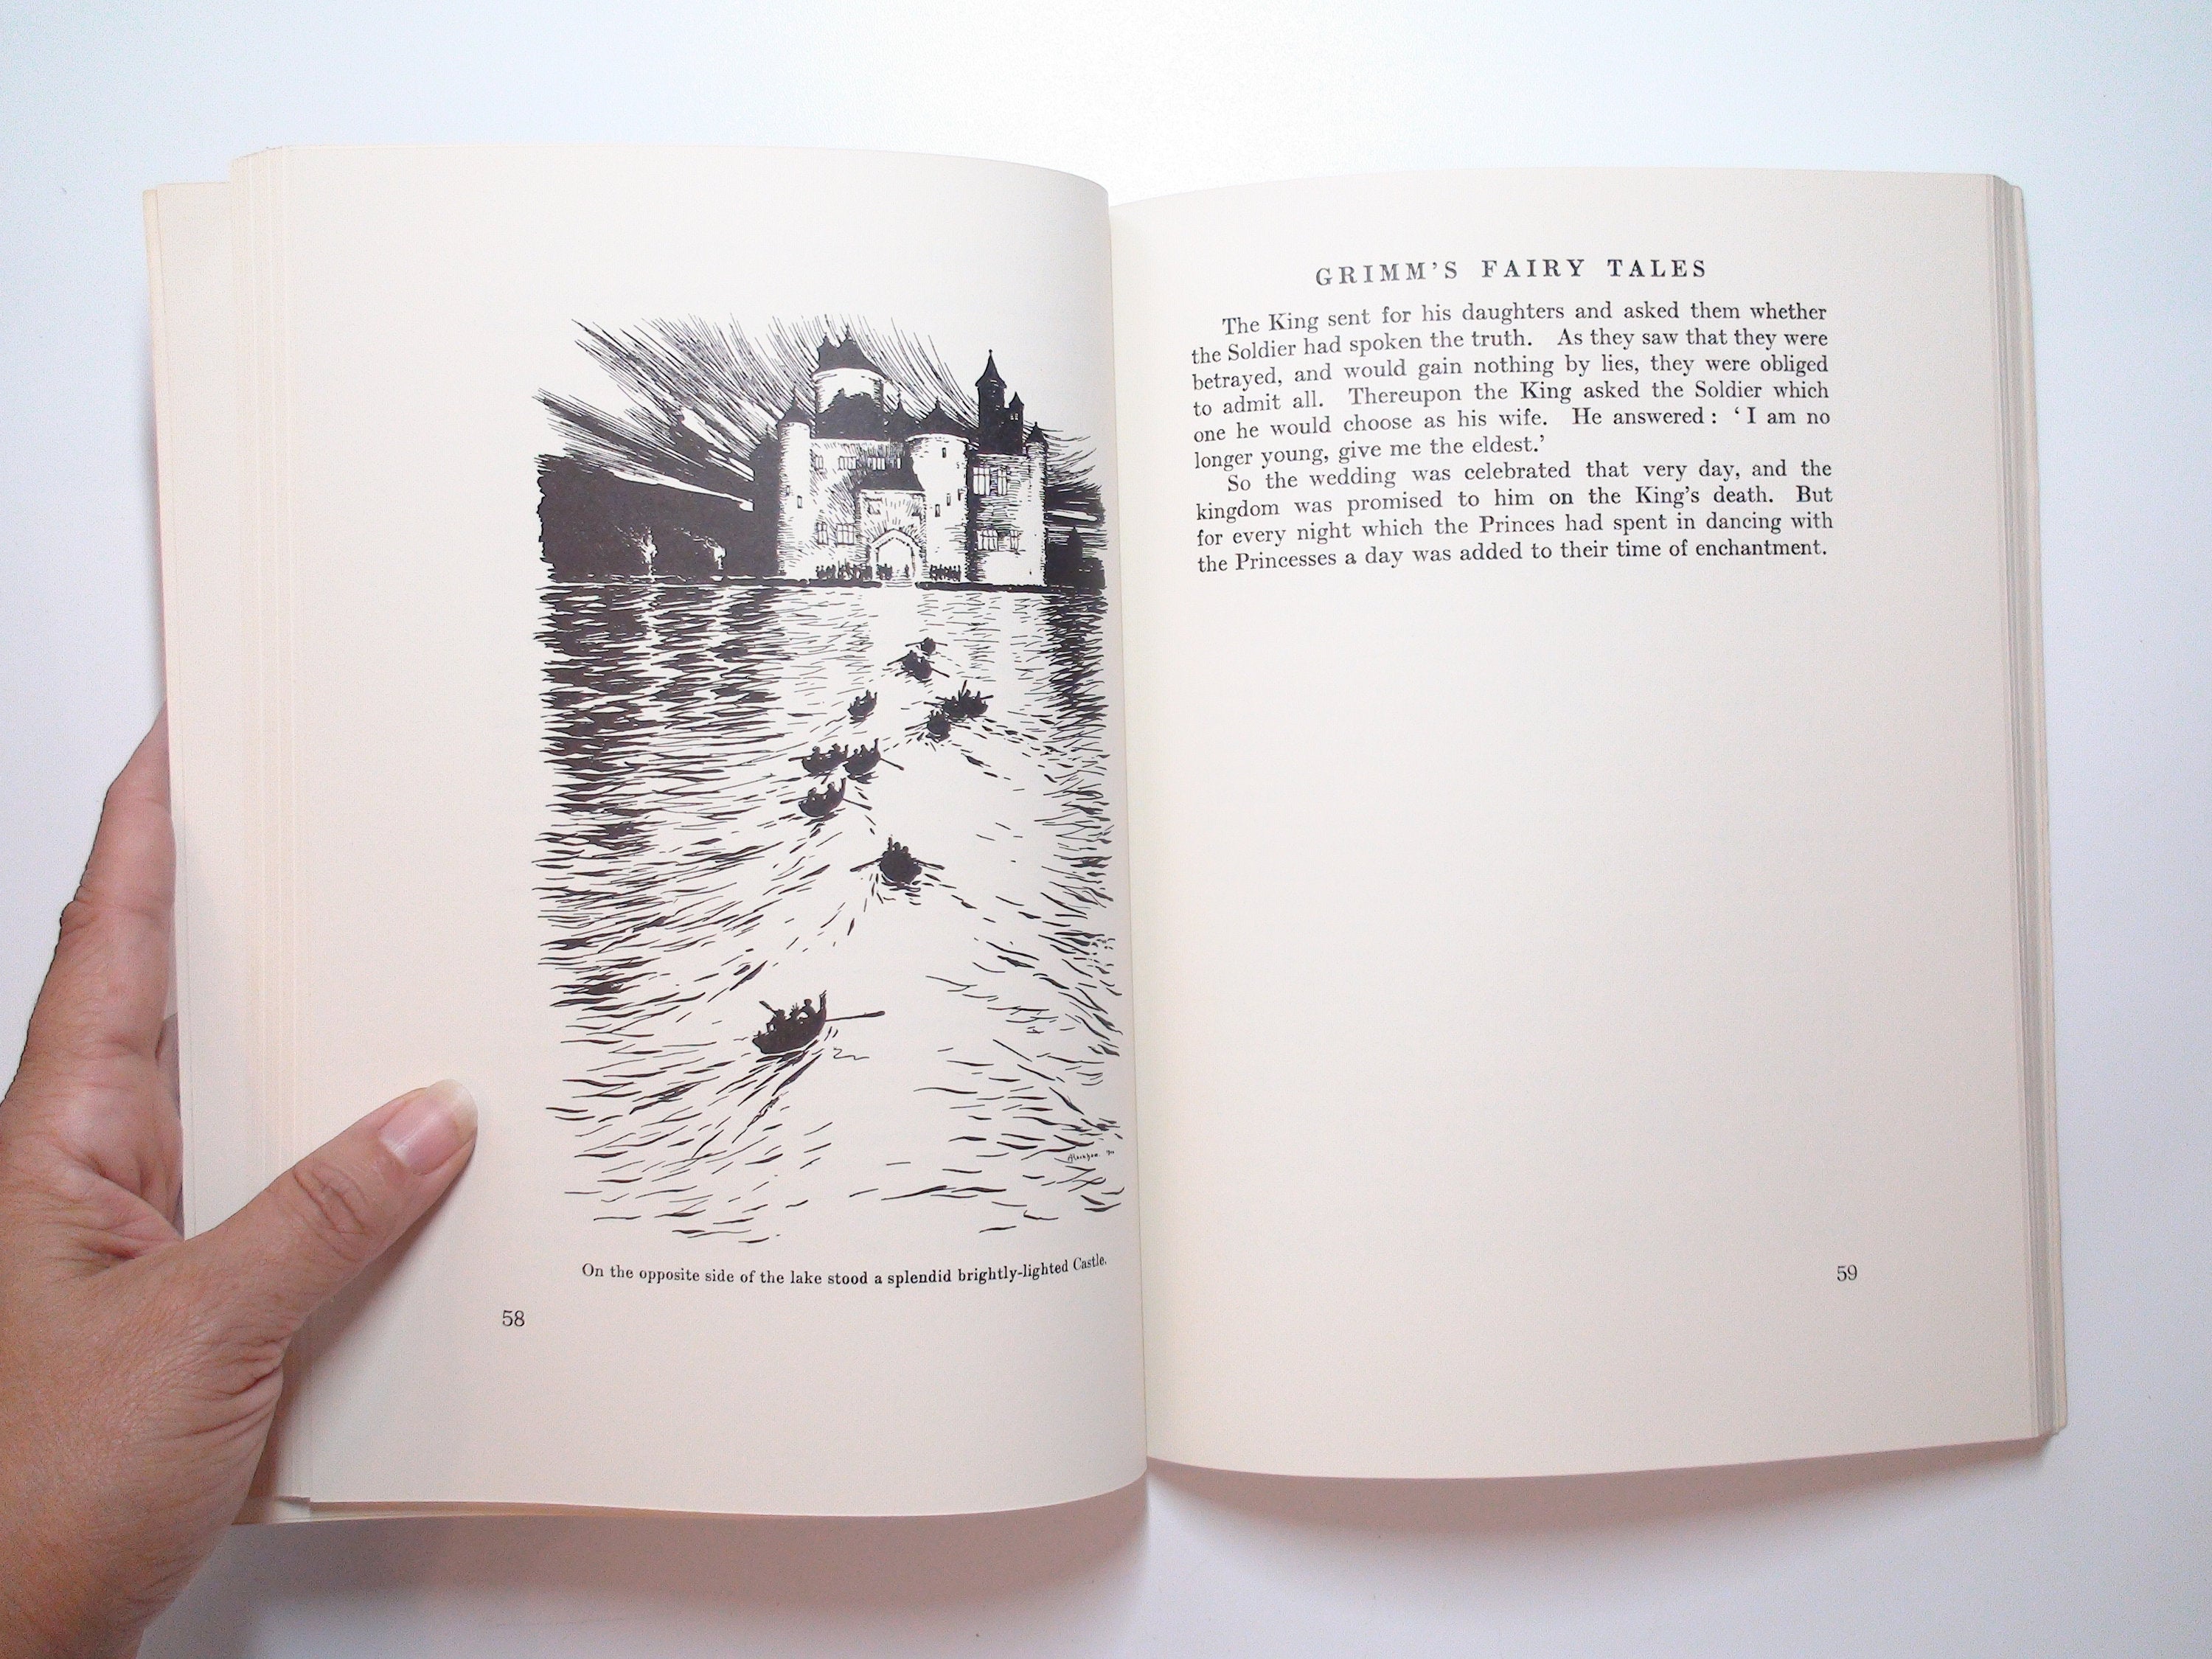 Grimm's Fairy Tales Illustrated by Arthur Rackham, Penguin Books, 1978